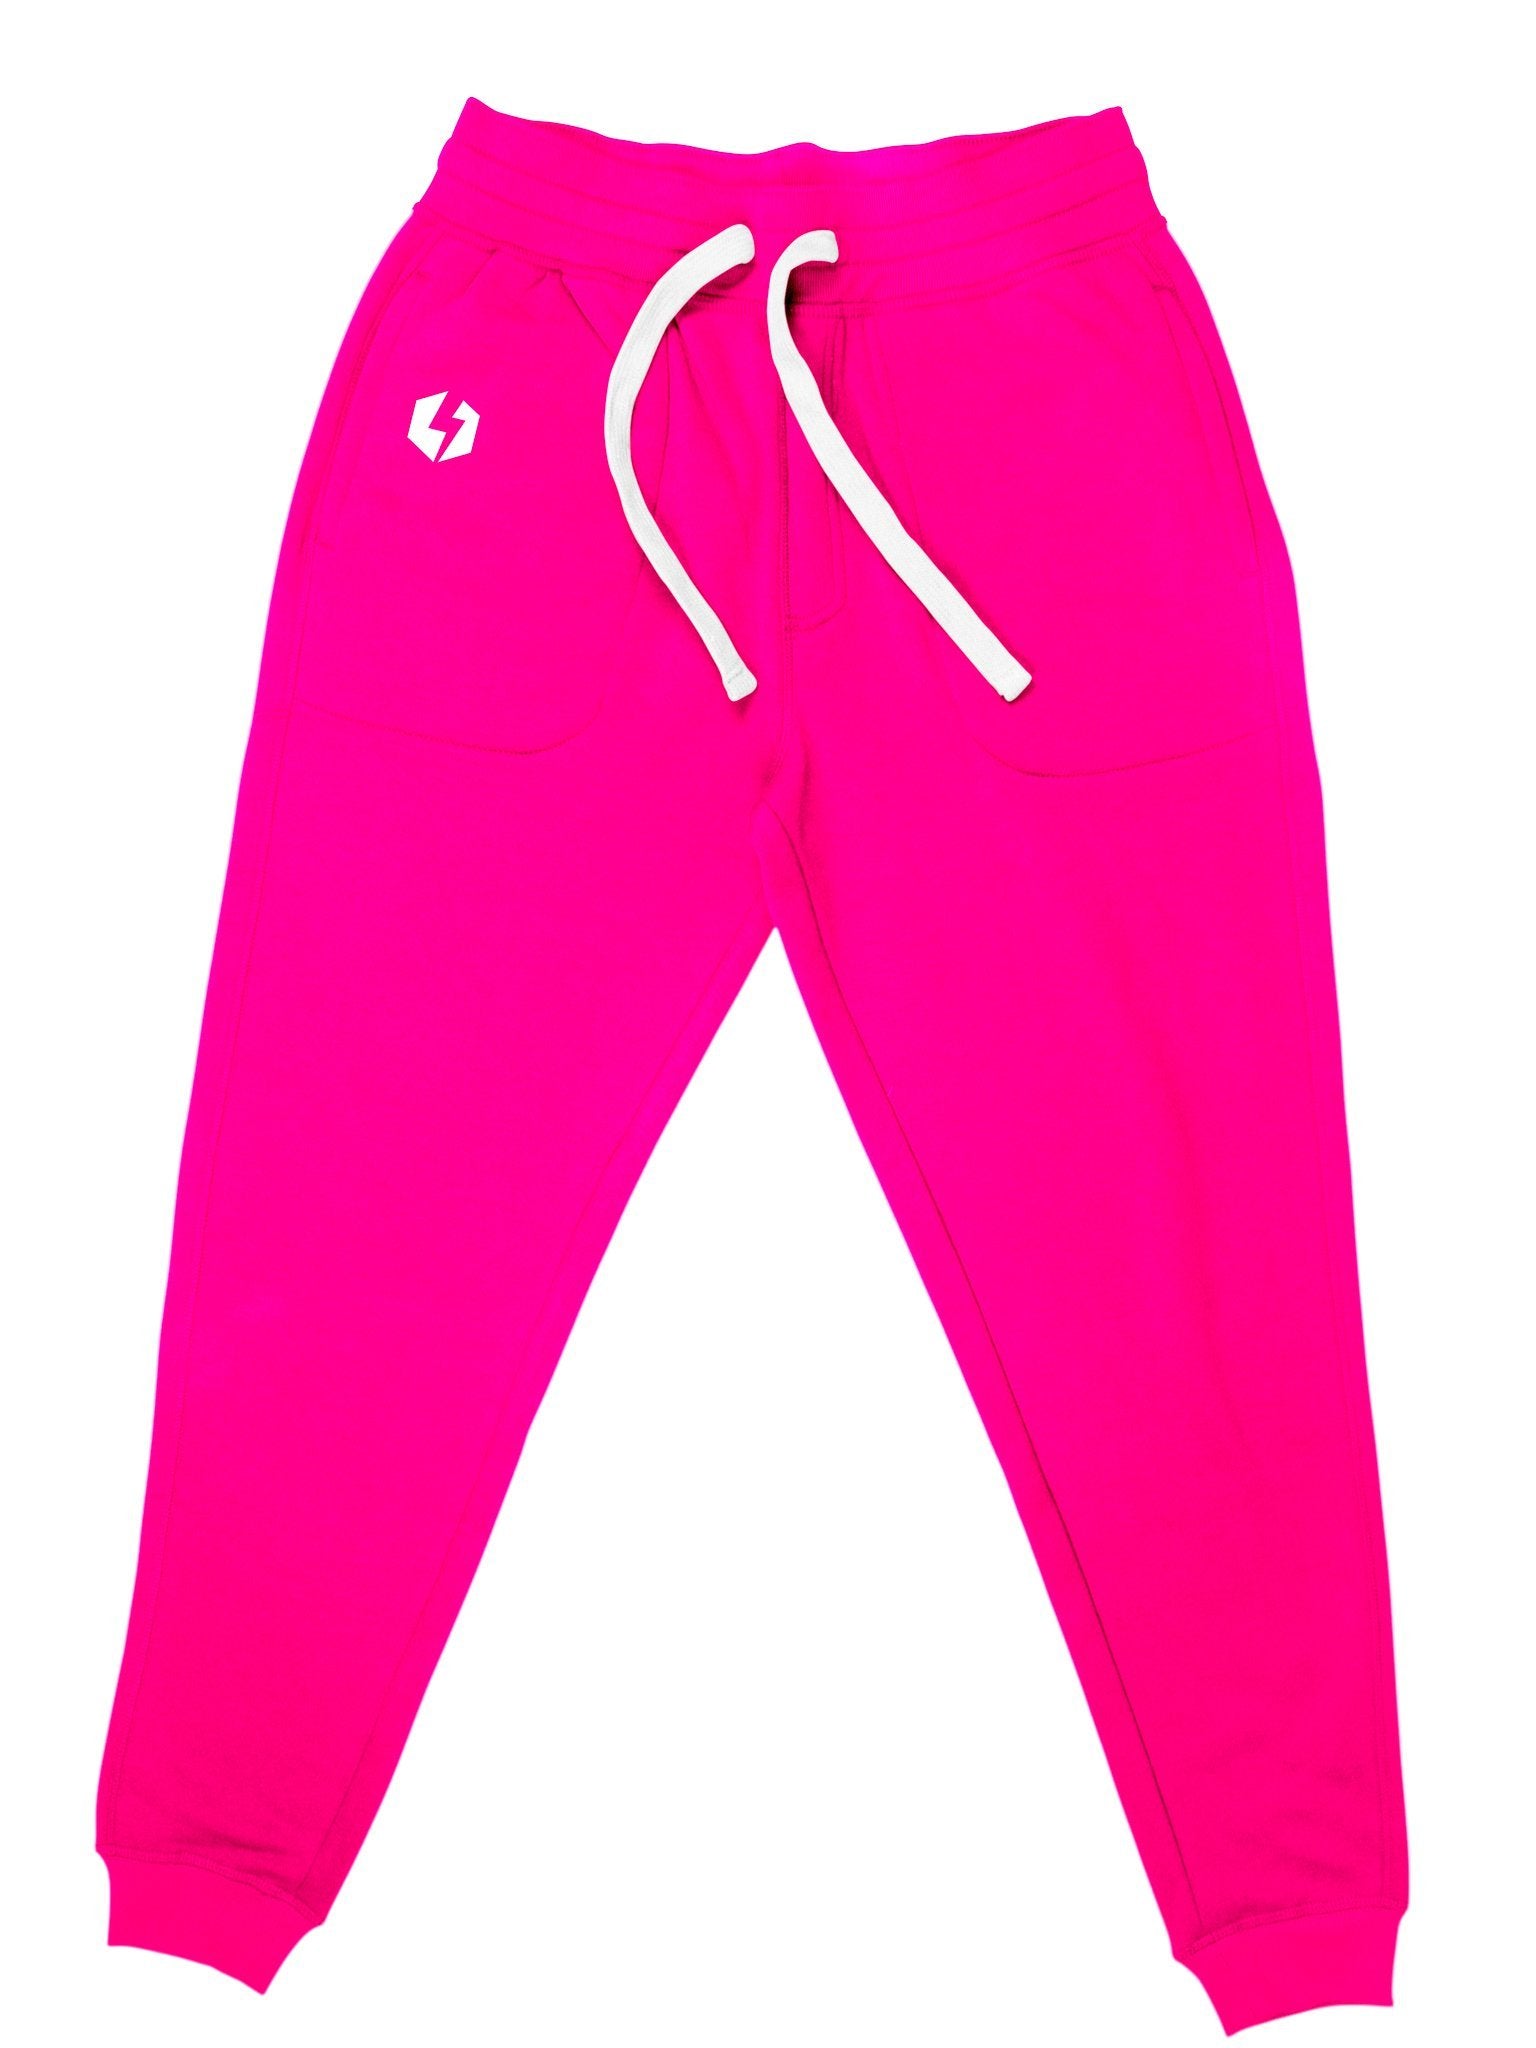 Pink Sweatpants, Soft Pink Jogger, Hand Printed Unisex Jogging